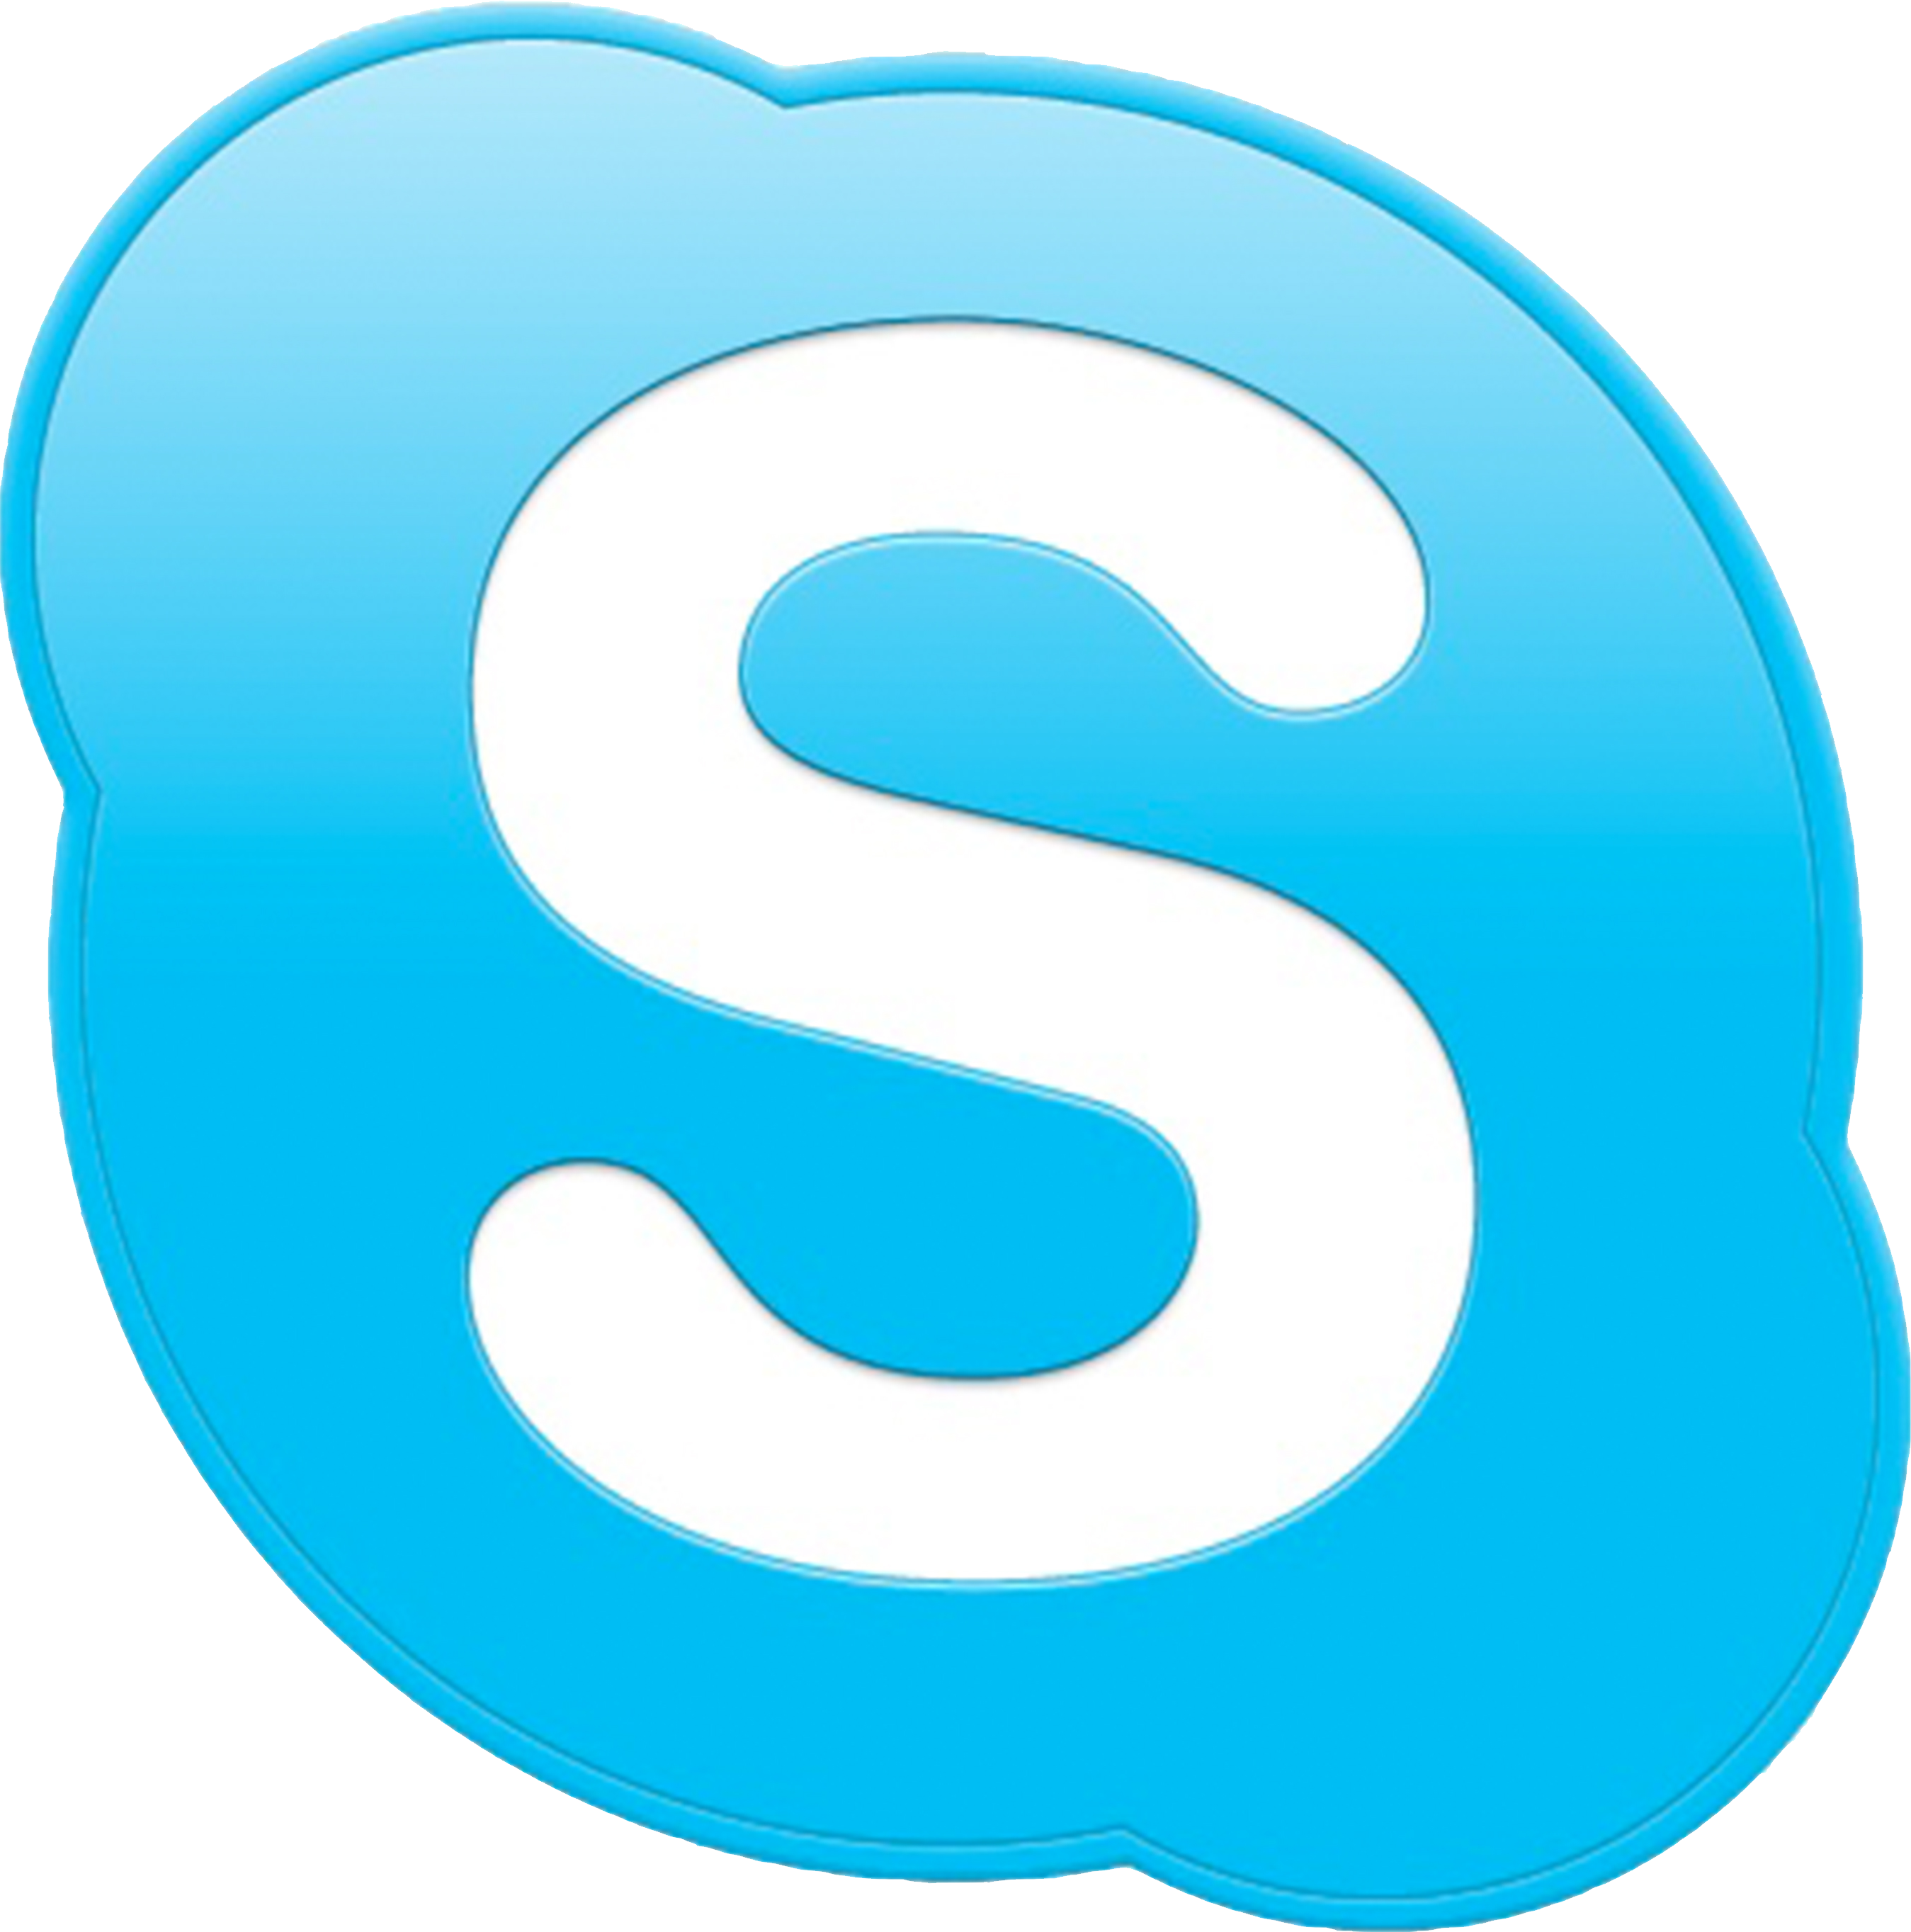 Similar Skype PNG Image